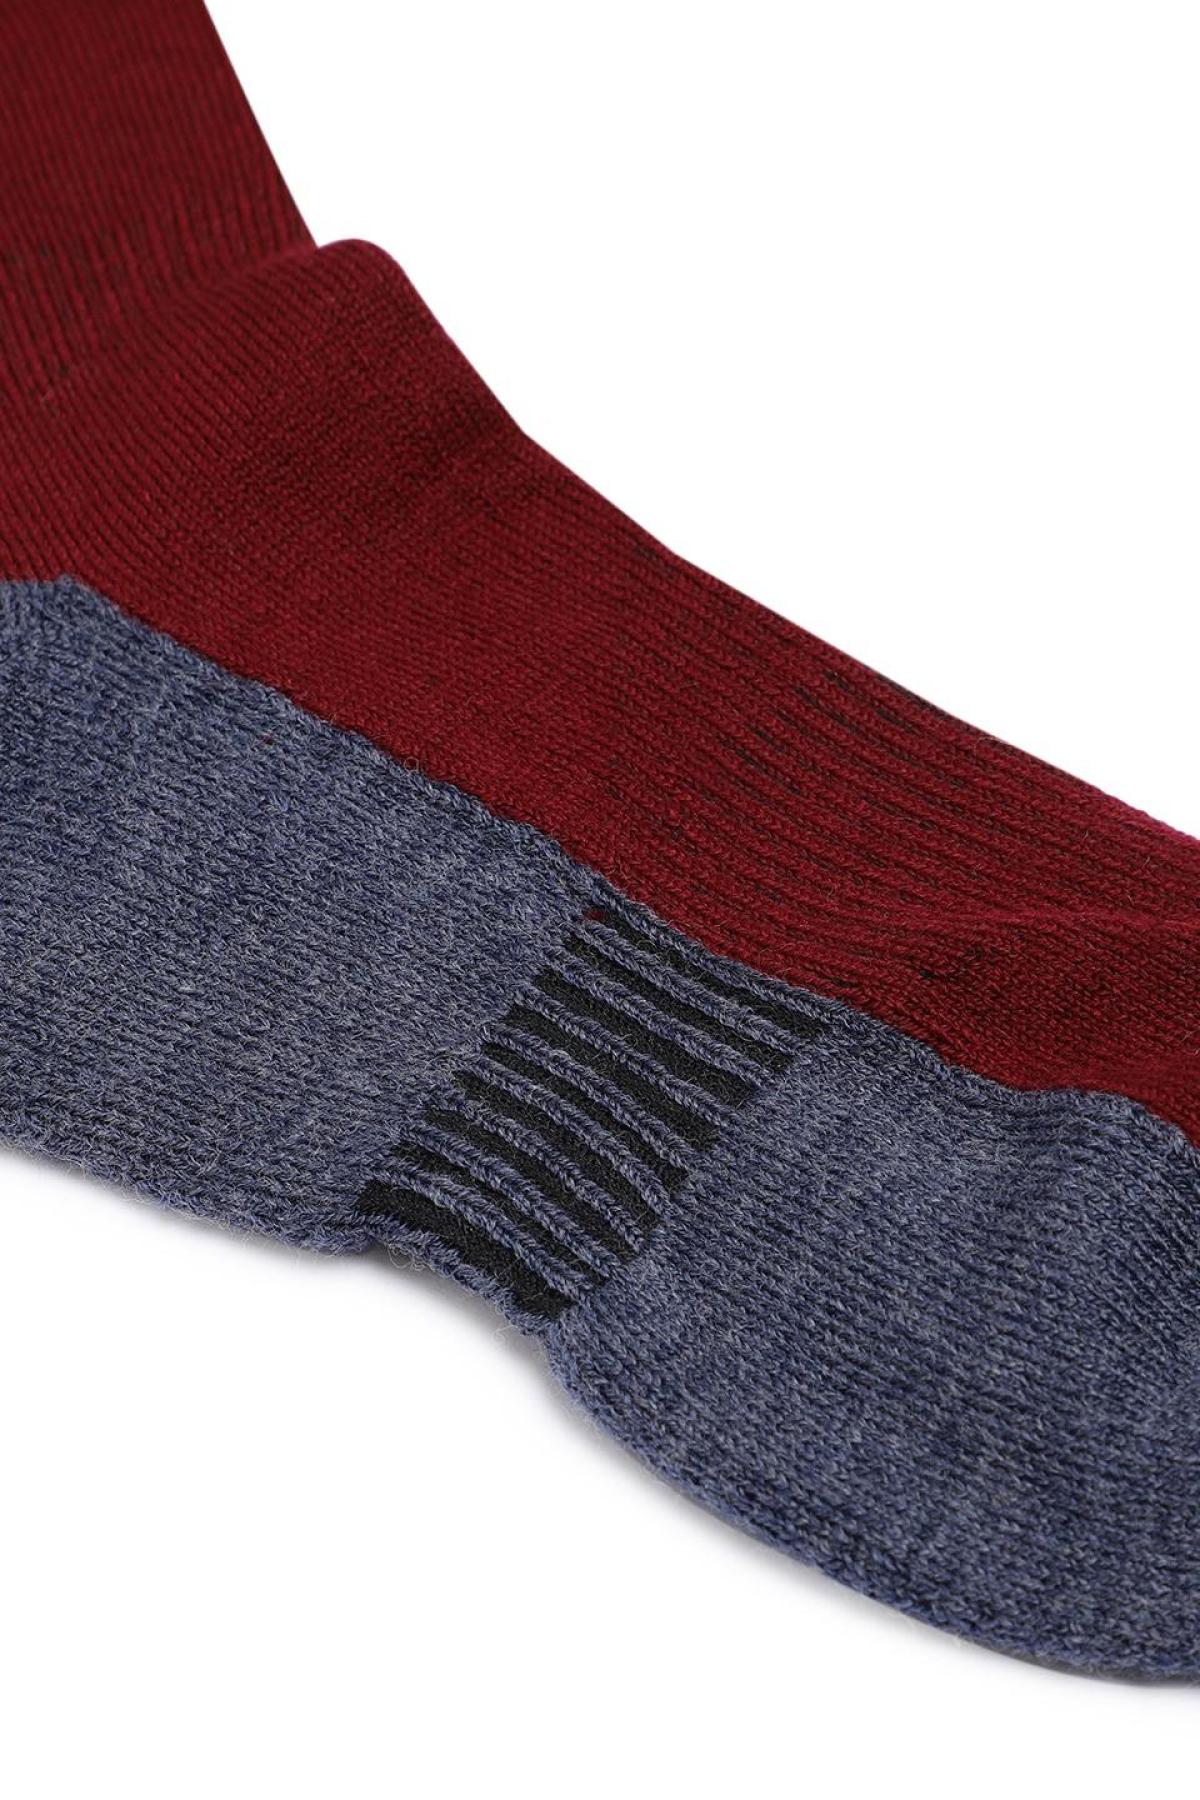 Cushioned Merino Wool Maroon-Grey Regular Socks | Men